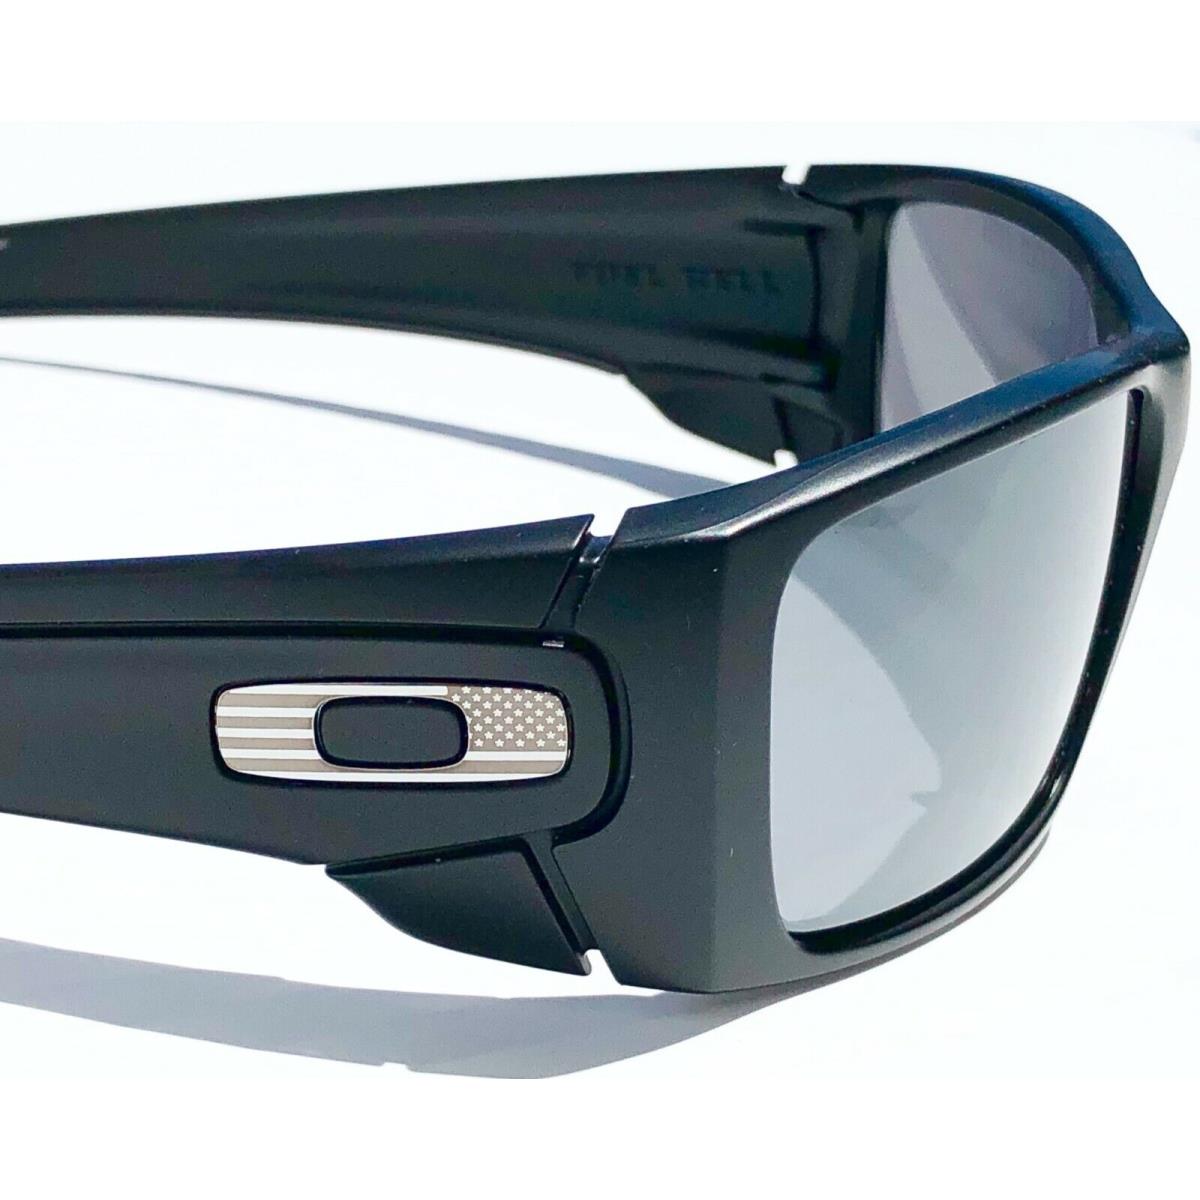 Oakley sunglasses Fuel Cell - Black Frame, Silver Lens 5